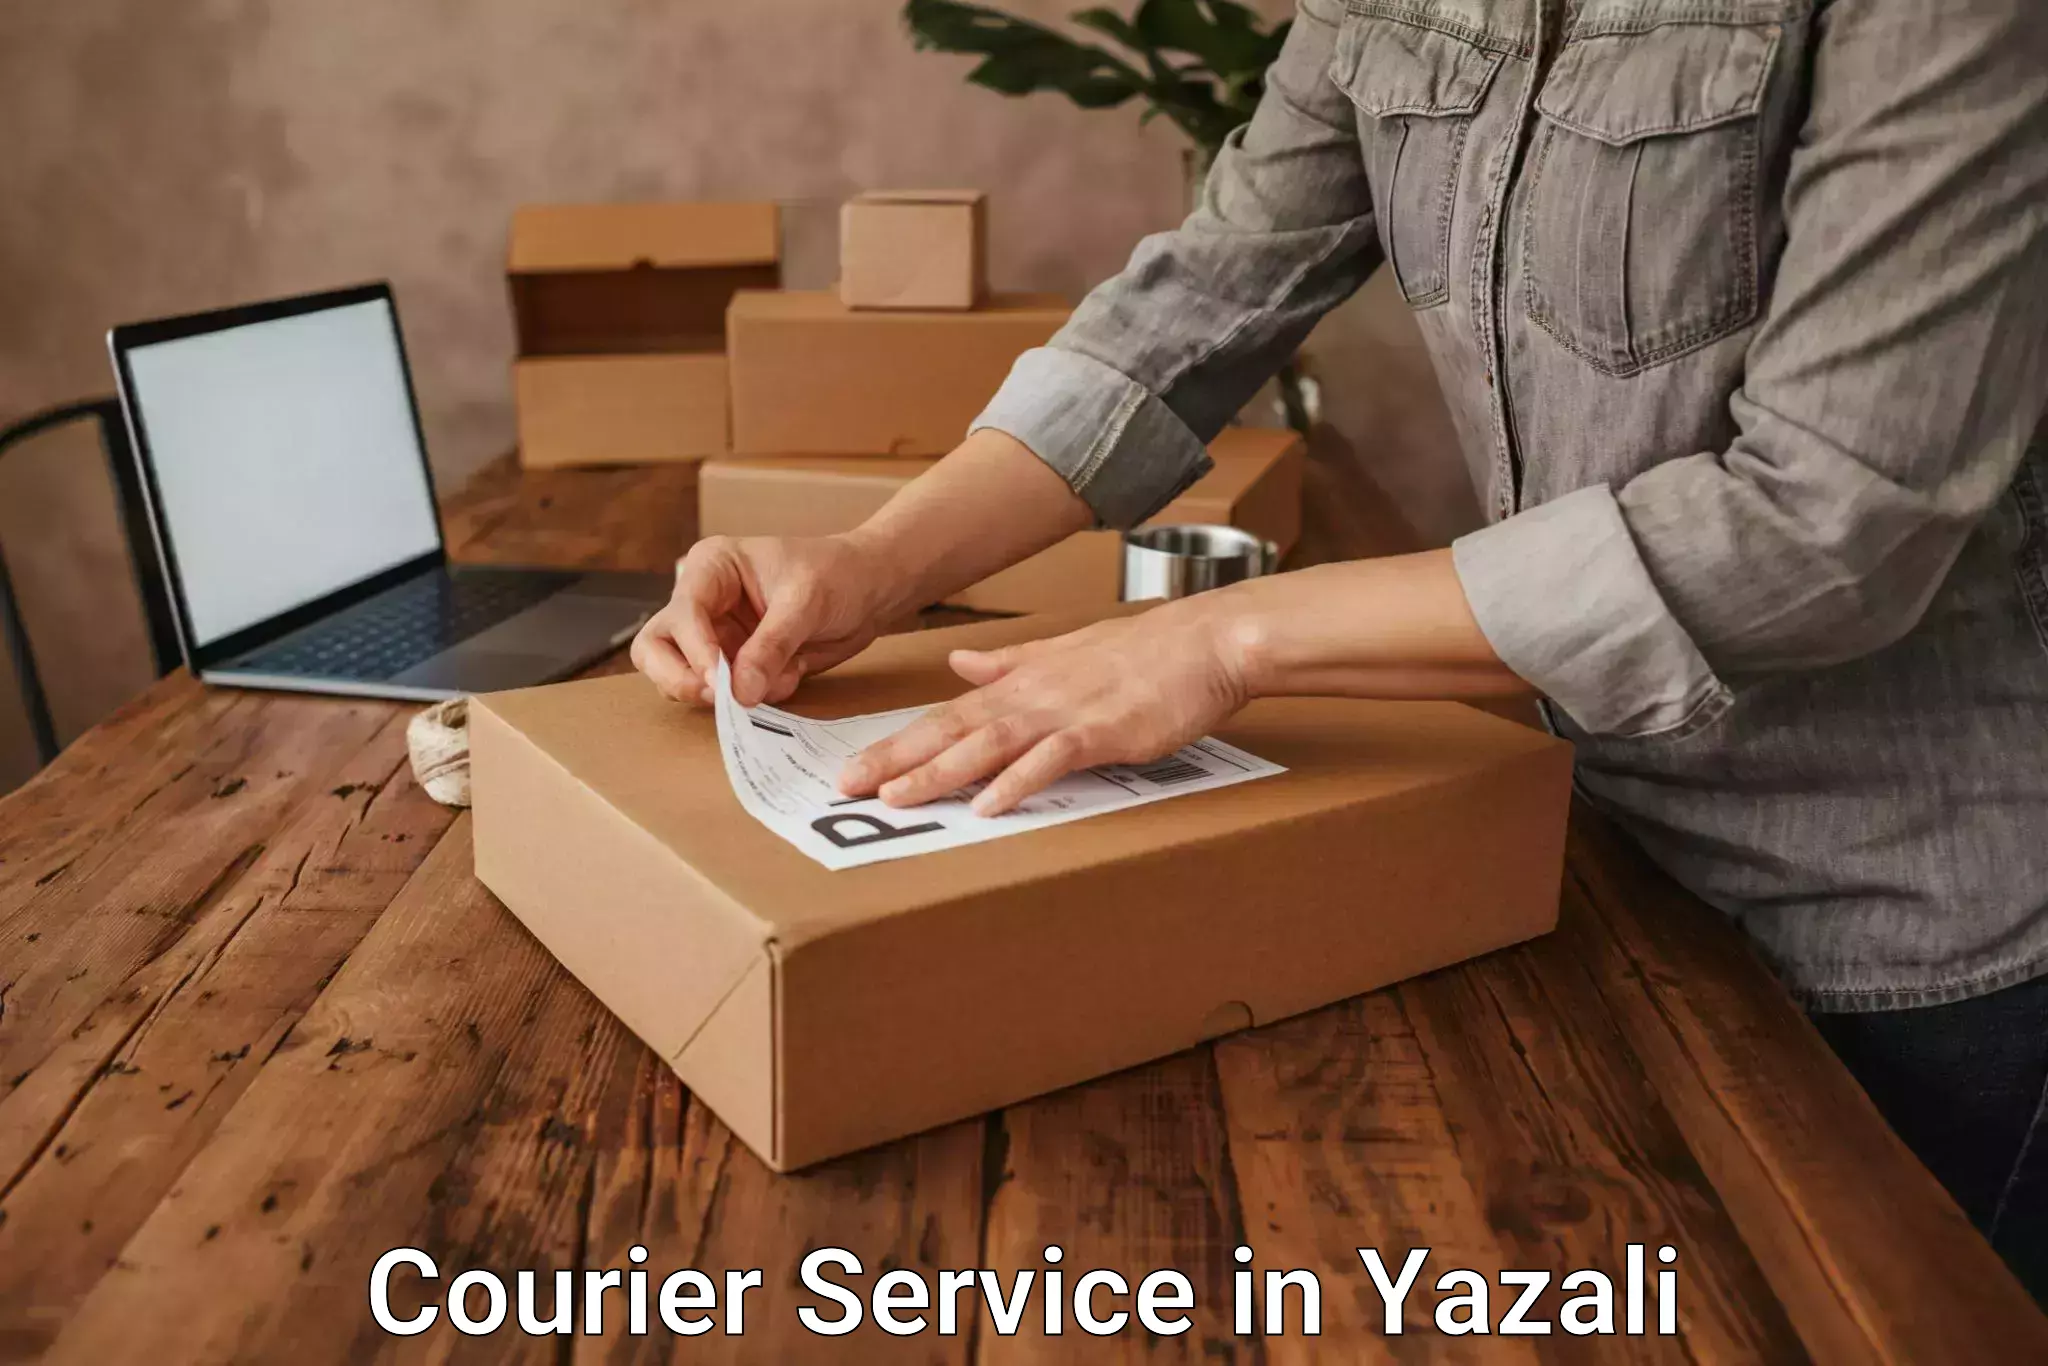 Cash on delivery service in Yazali